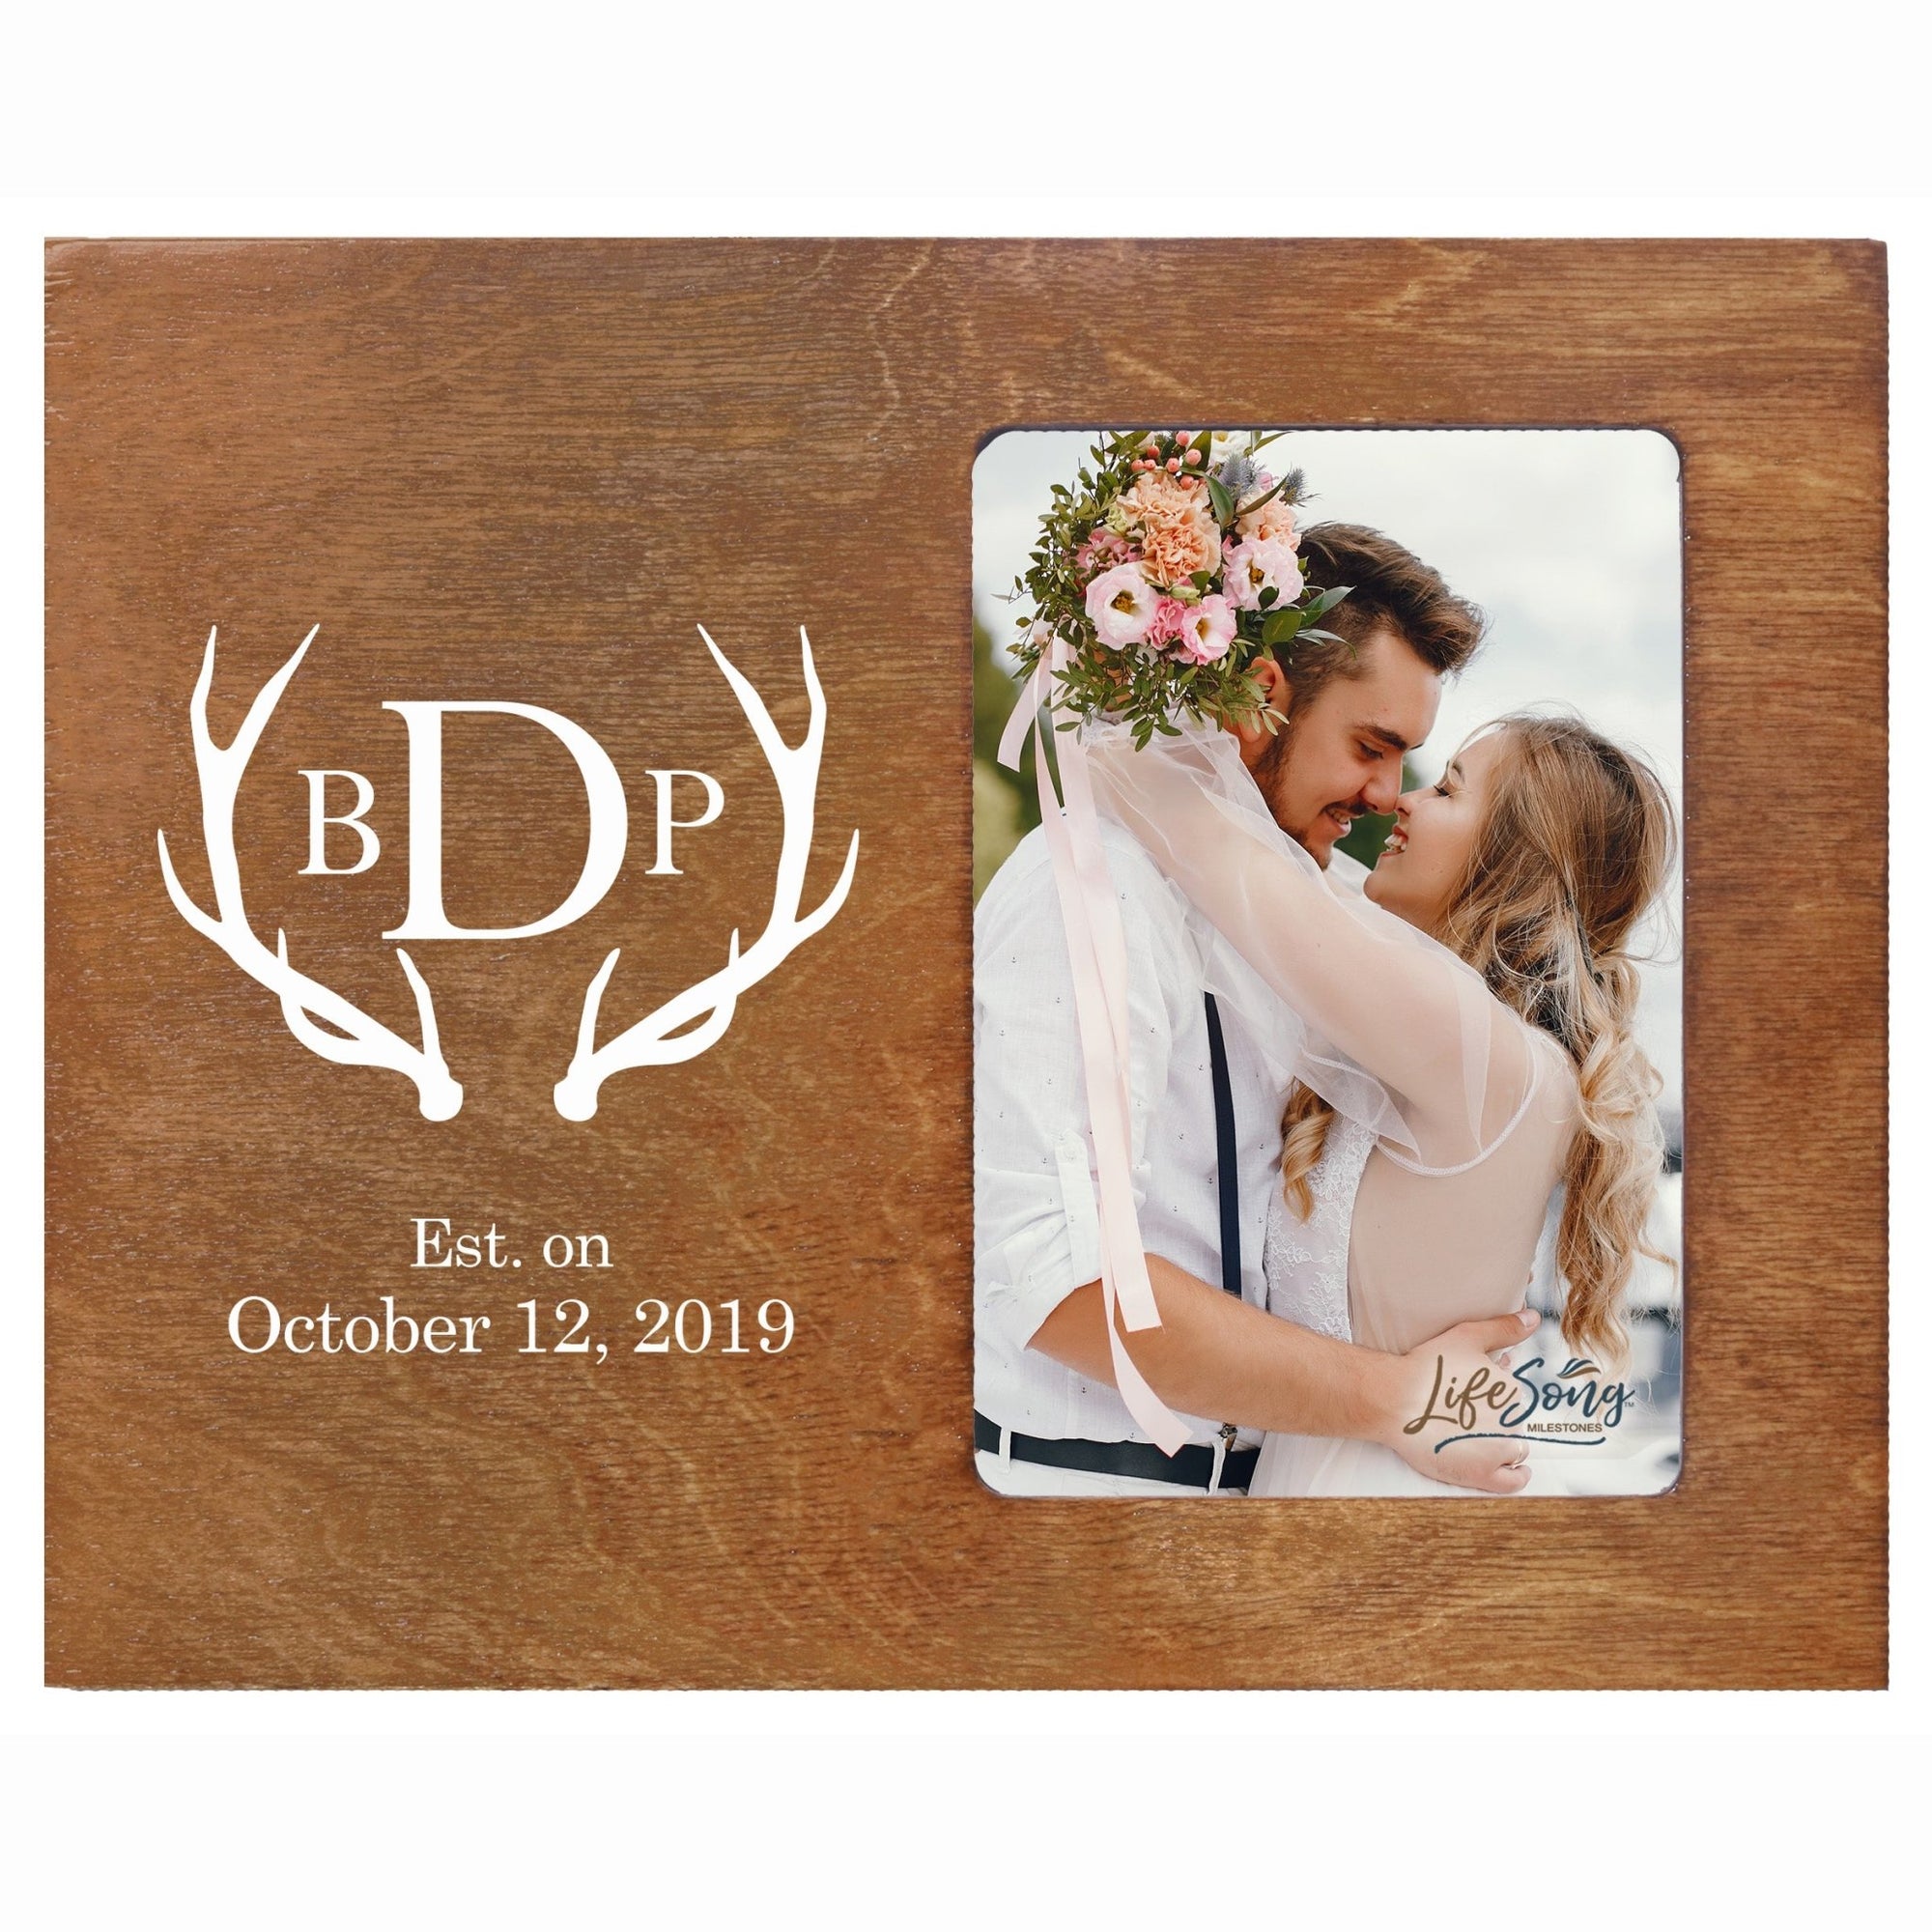 Custom Digitally Printed Wedding Photo Frame Holds 4x6 Photo - Antlers - LifeSong Milestones